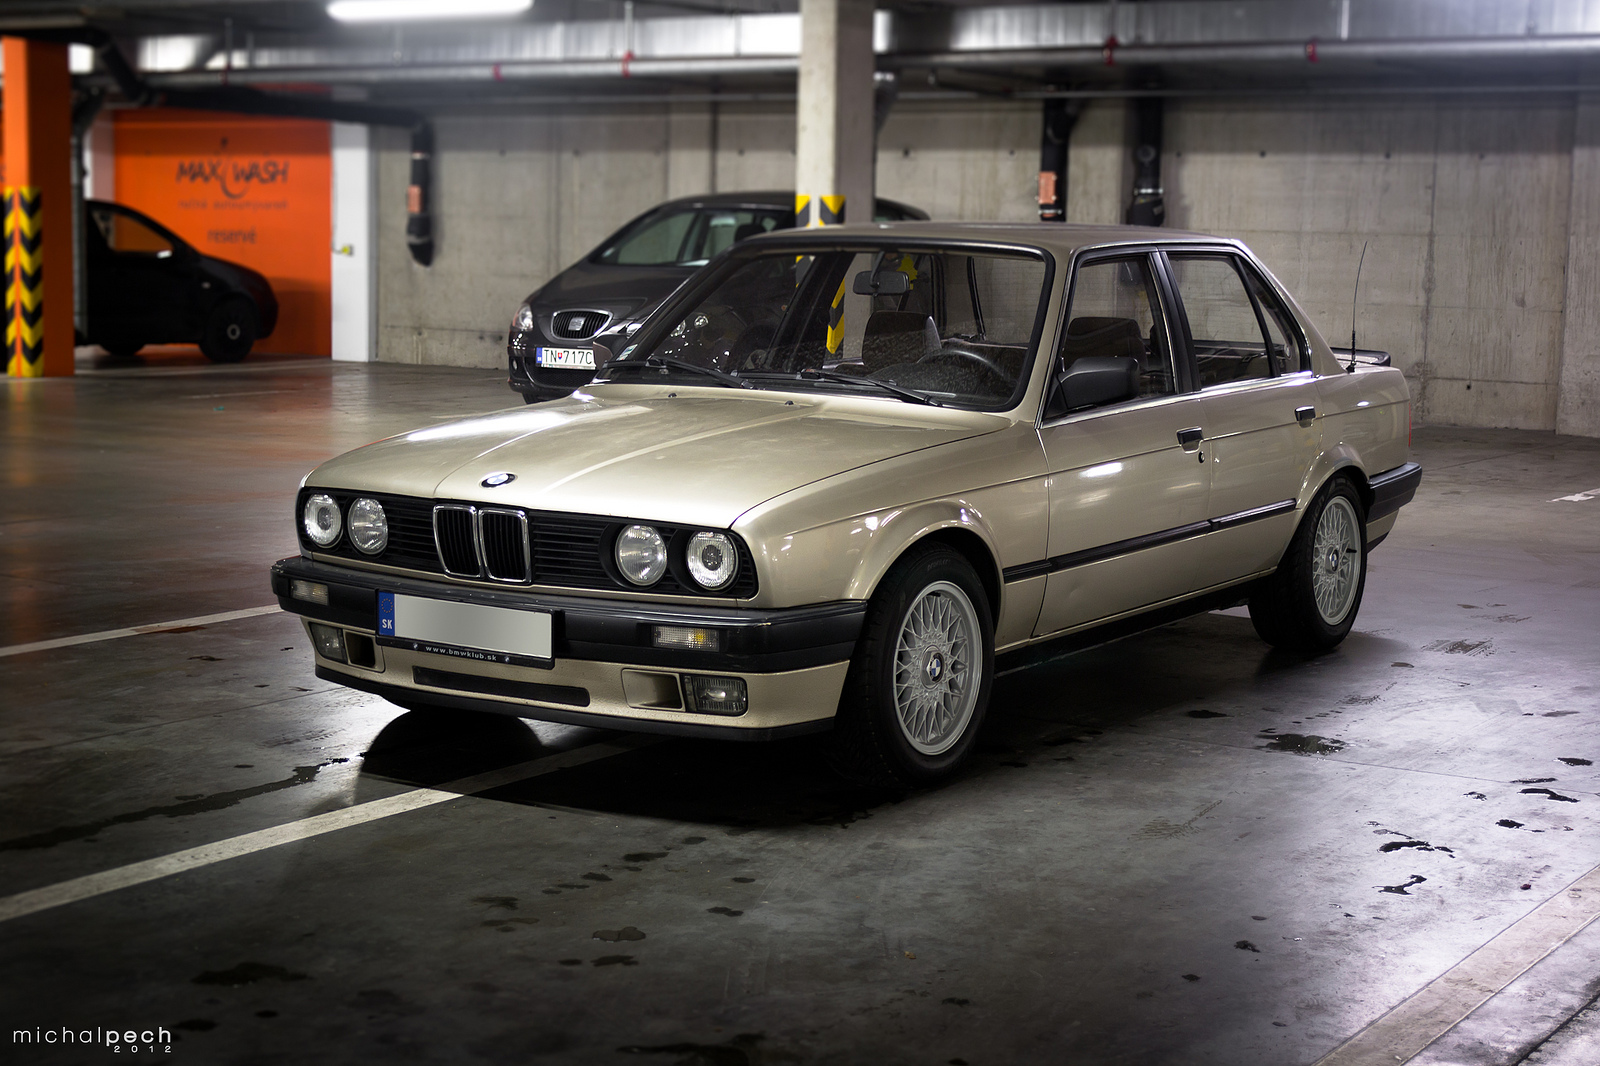 My BMW 316i (e30) | Flickr - Photo Sharing!